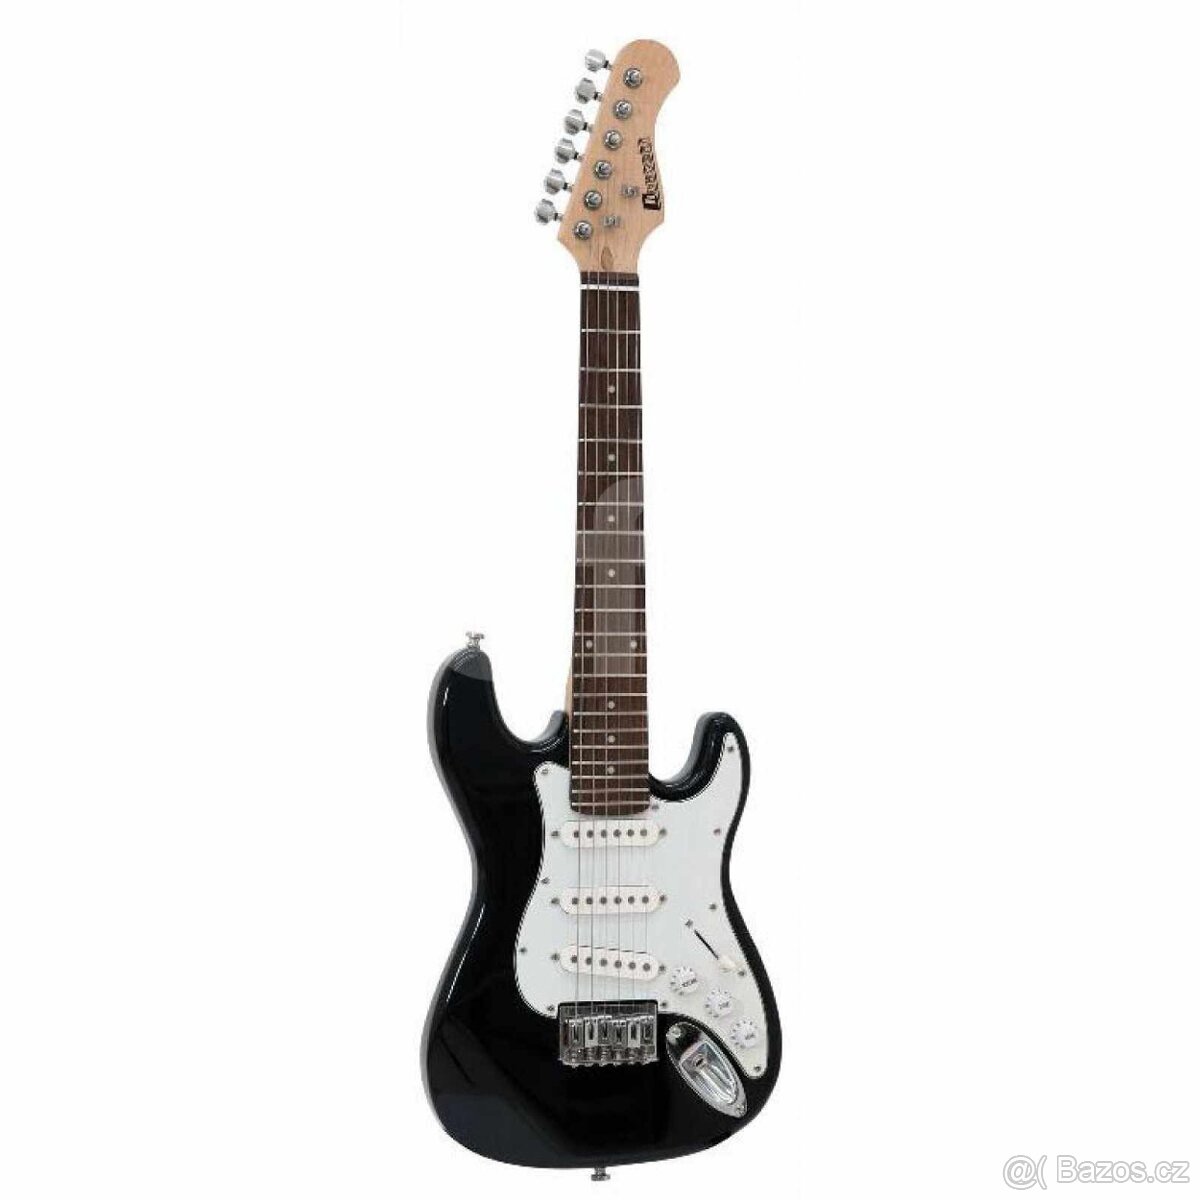 Kytara Dimavery J-350 vhodná i jako dárek nehrana